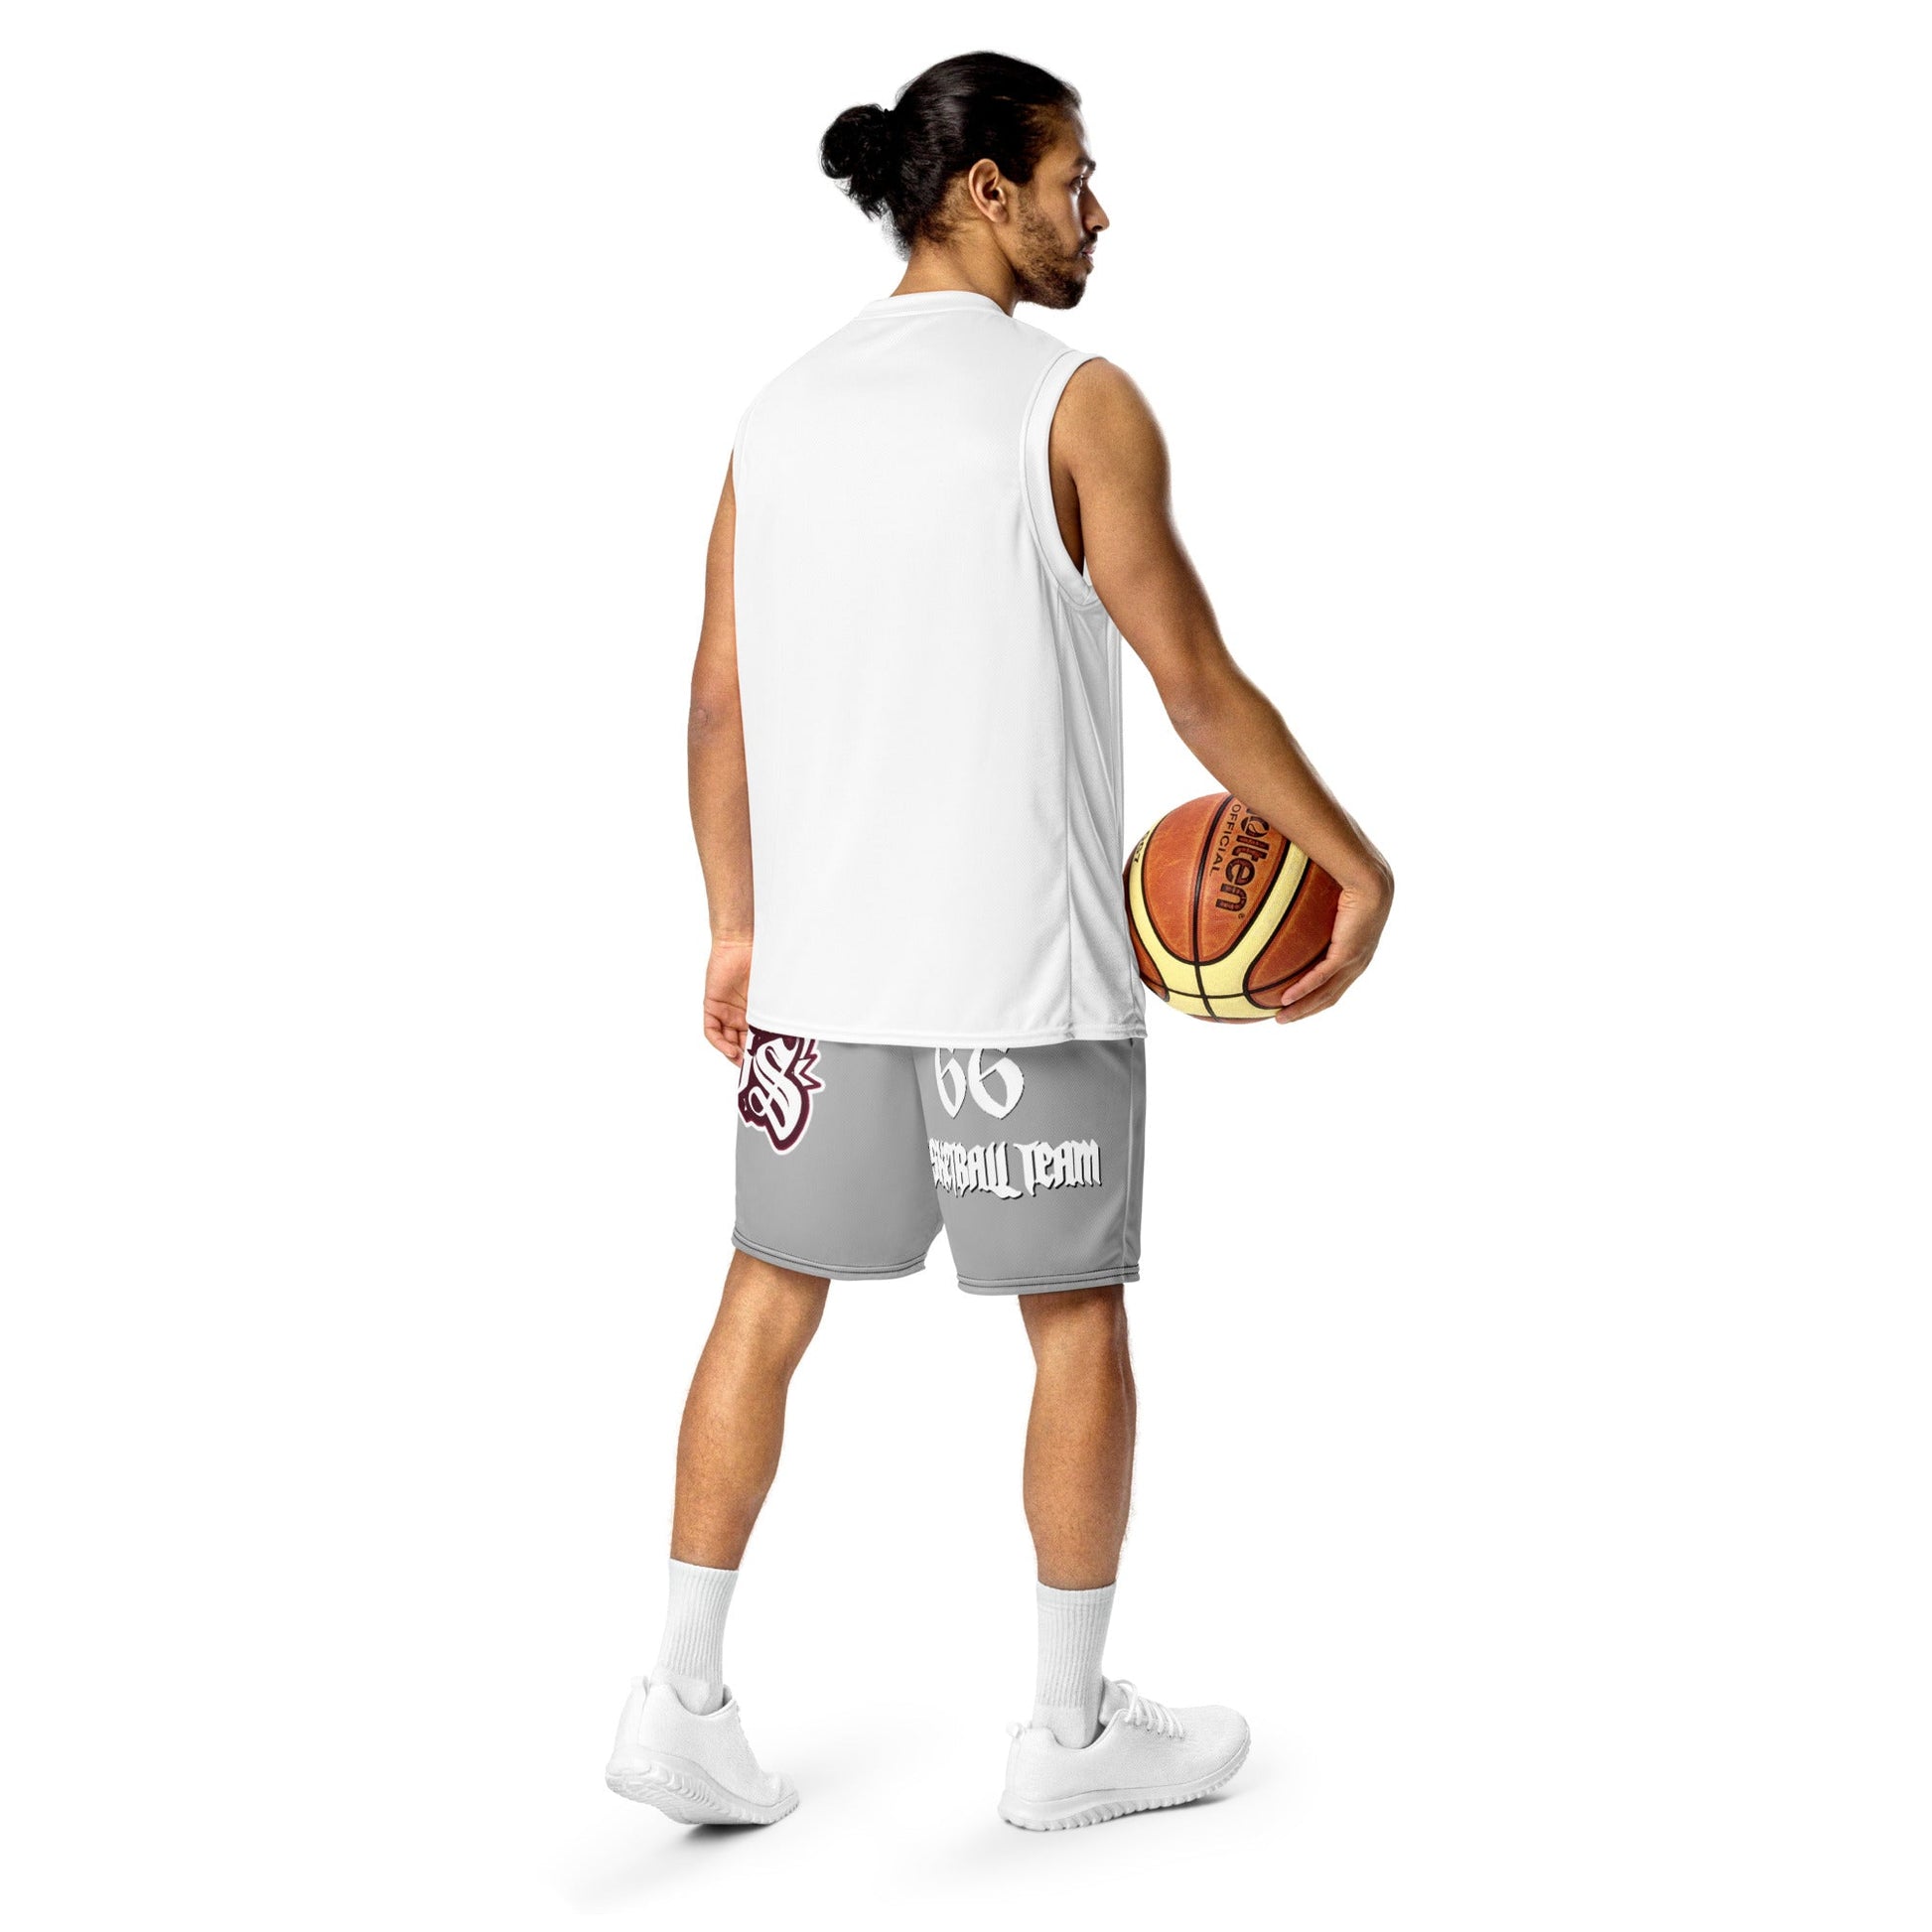 Basketball Team 66 Unisex Mesh-Shorts Gray - BLOODY-STREETS.DE Streetwear Herren und Damen Hoodies, T-Shirts, Pullis